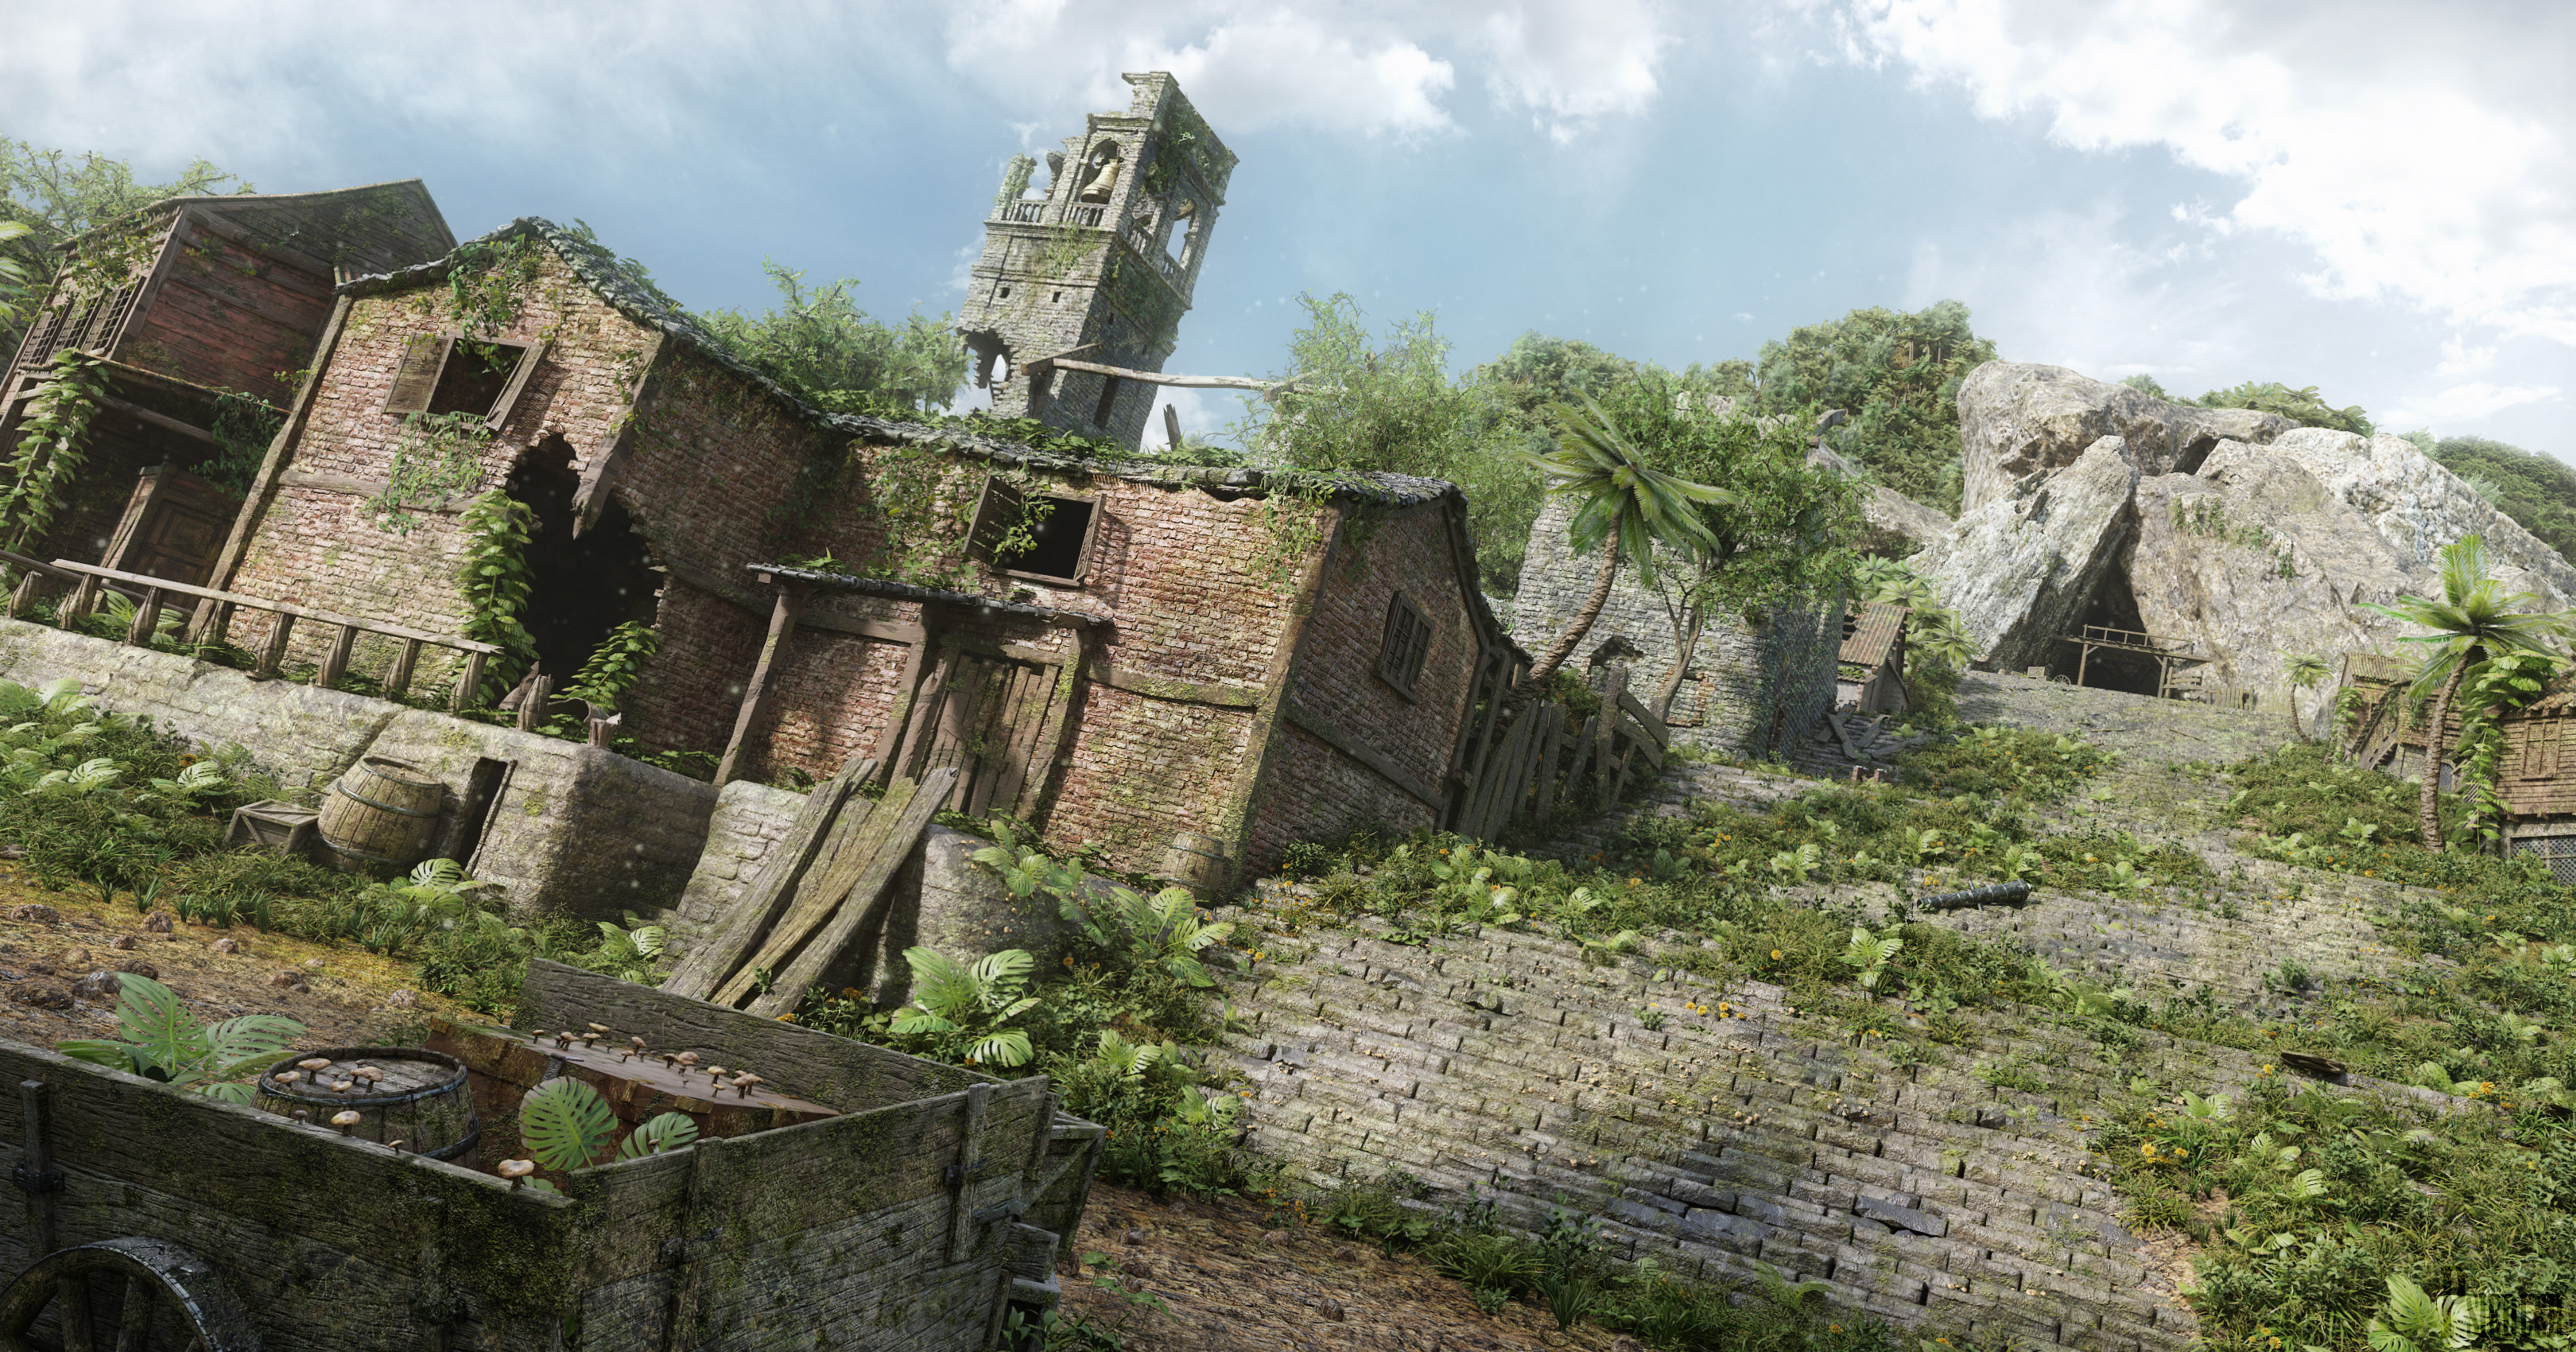 Abandoned village. Uncharted 4 environment. Uncharted дом. Места из игр. Дом из Uncharted 4.